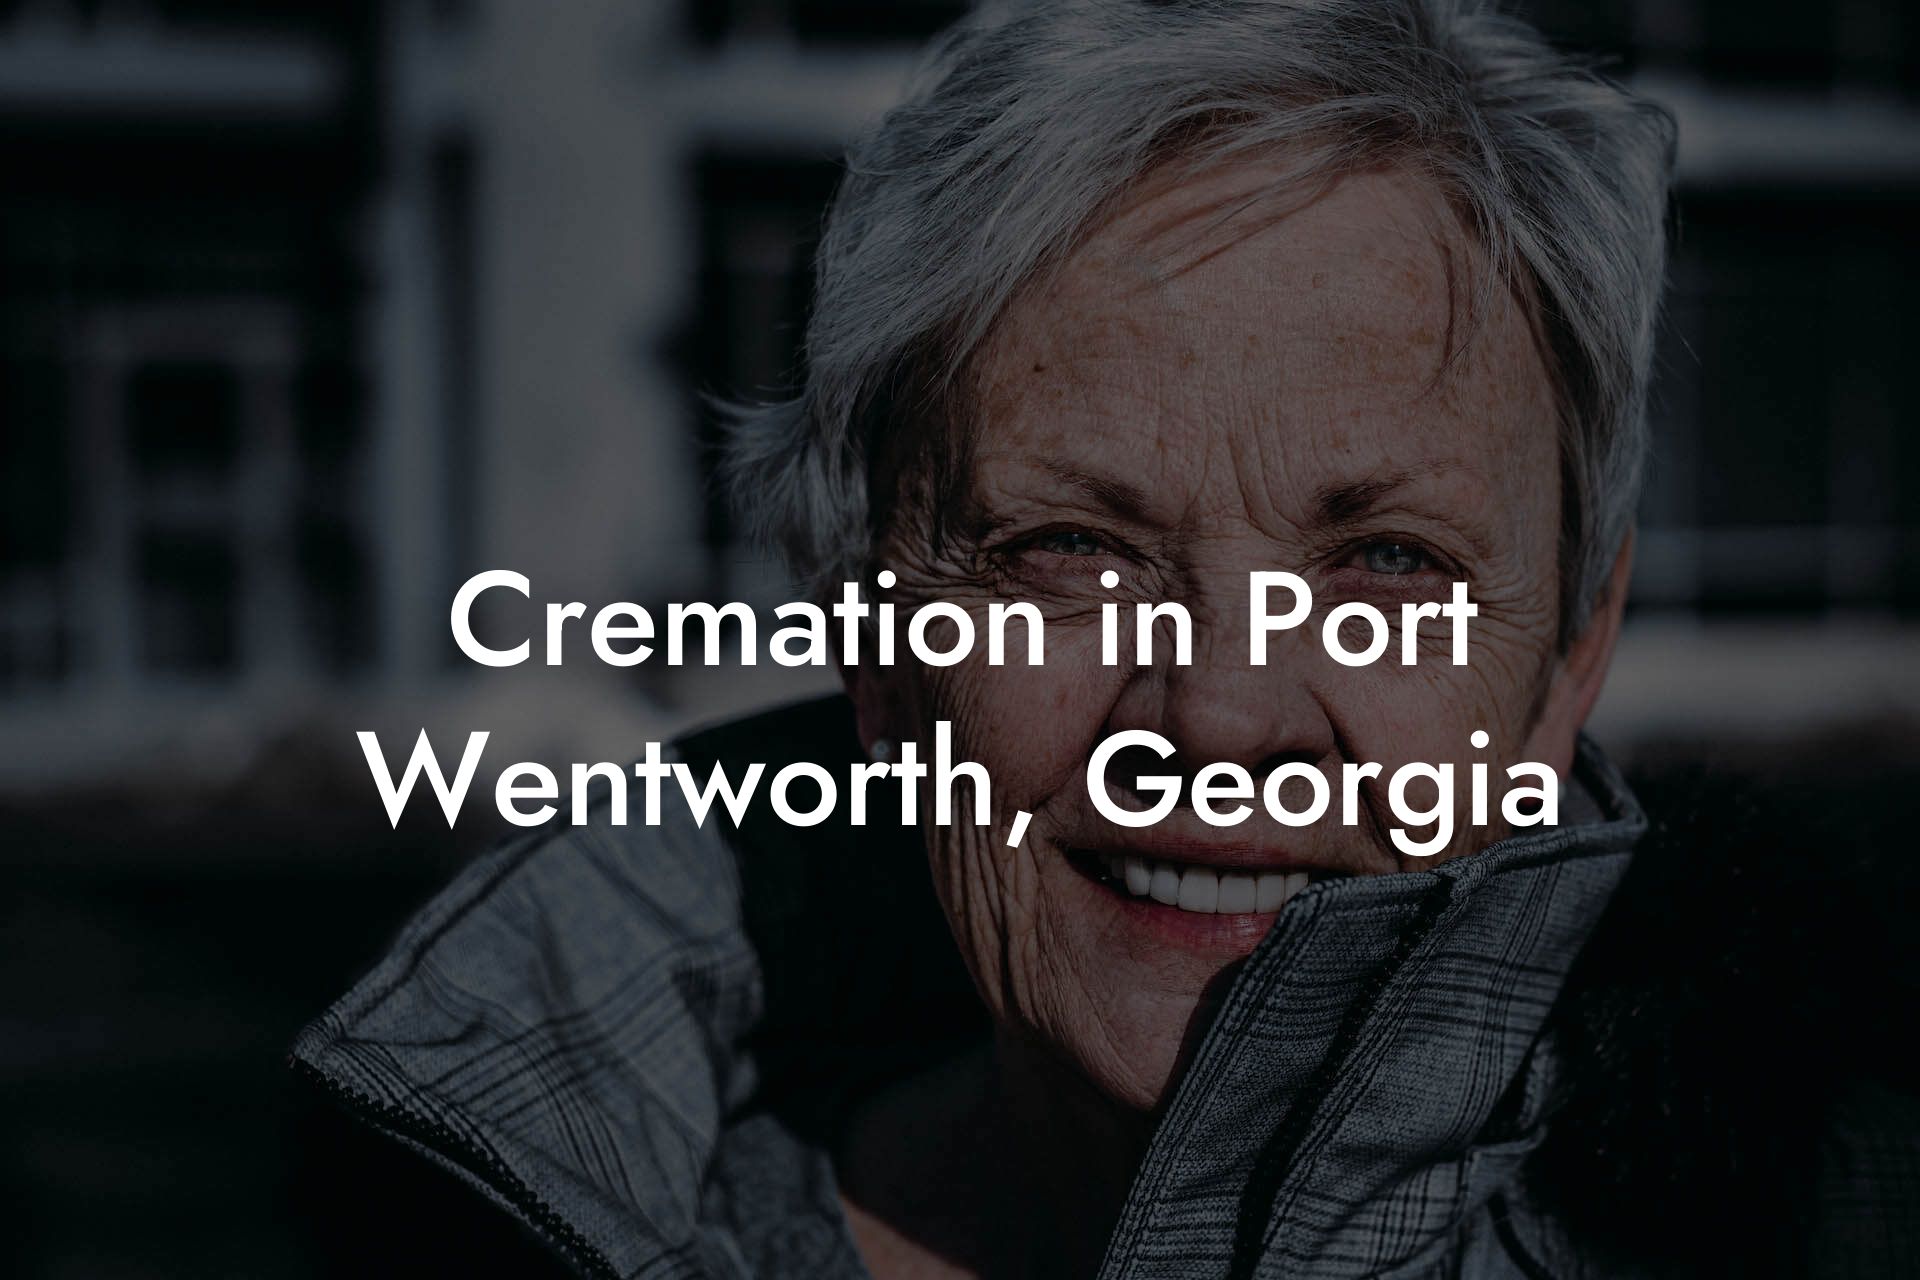 Cremation in Port Wentworth, Georgia